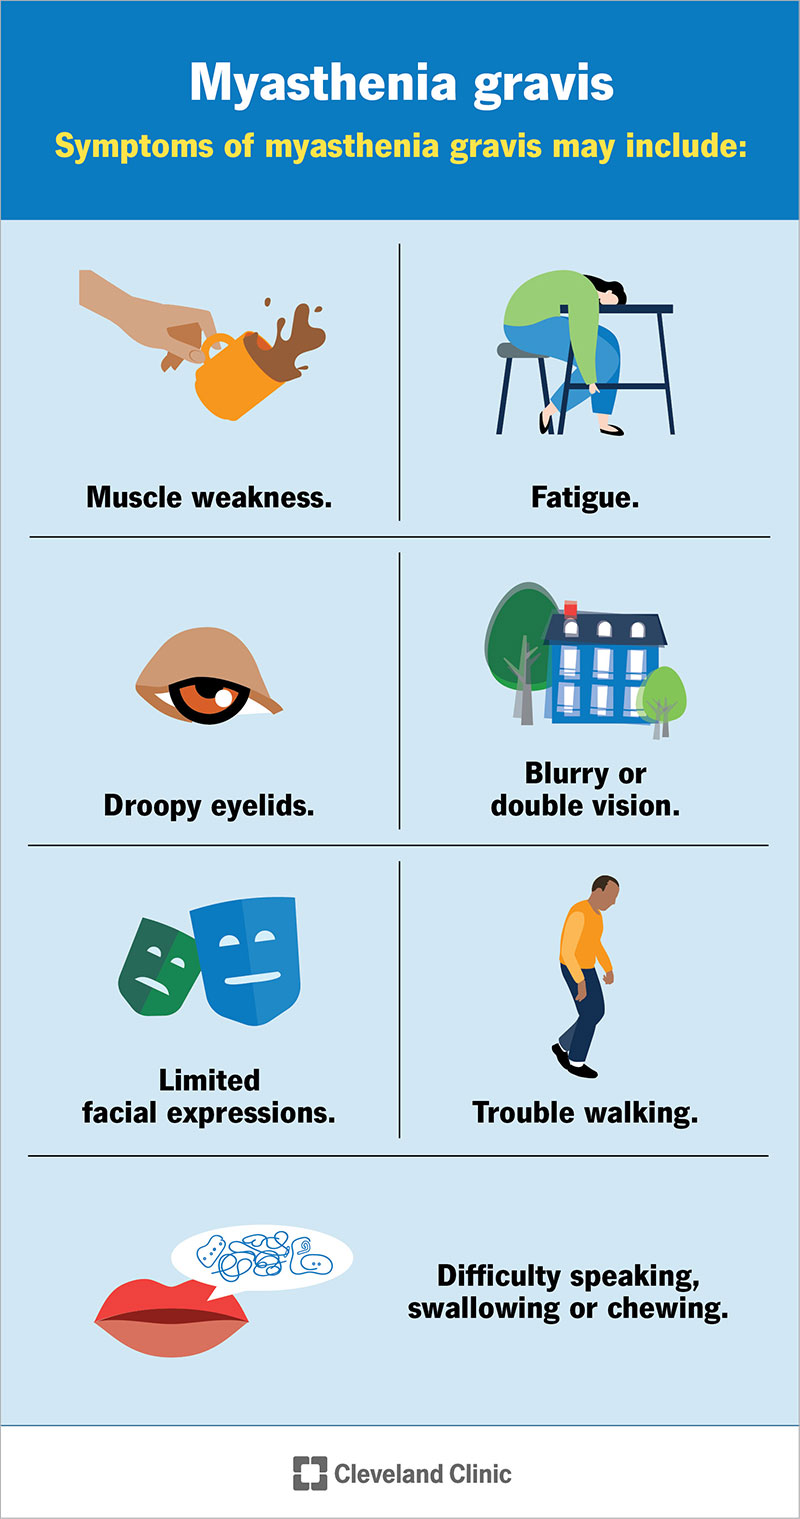 Seven common symptoms of myasthenia gravis.